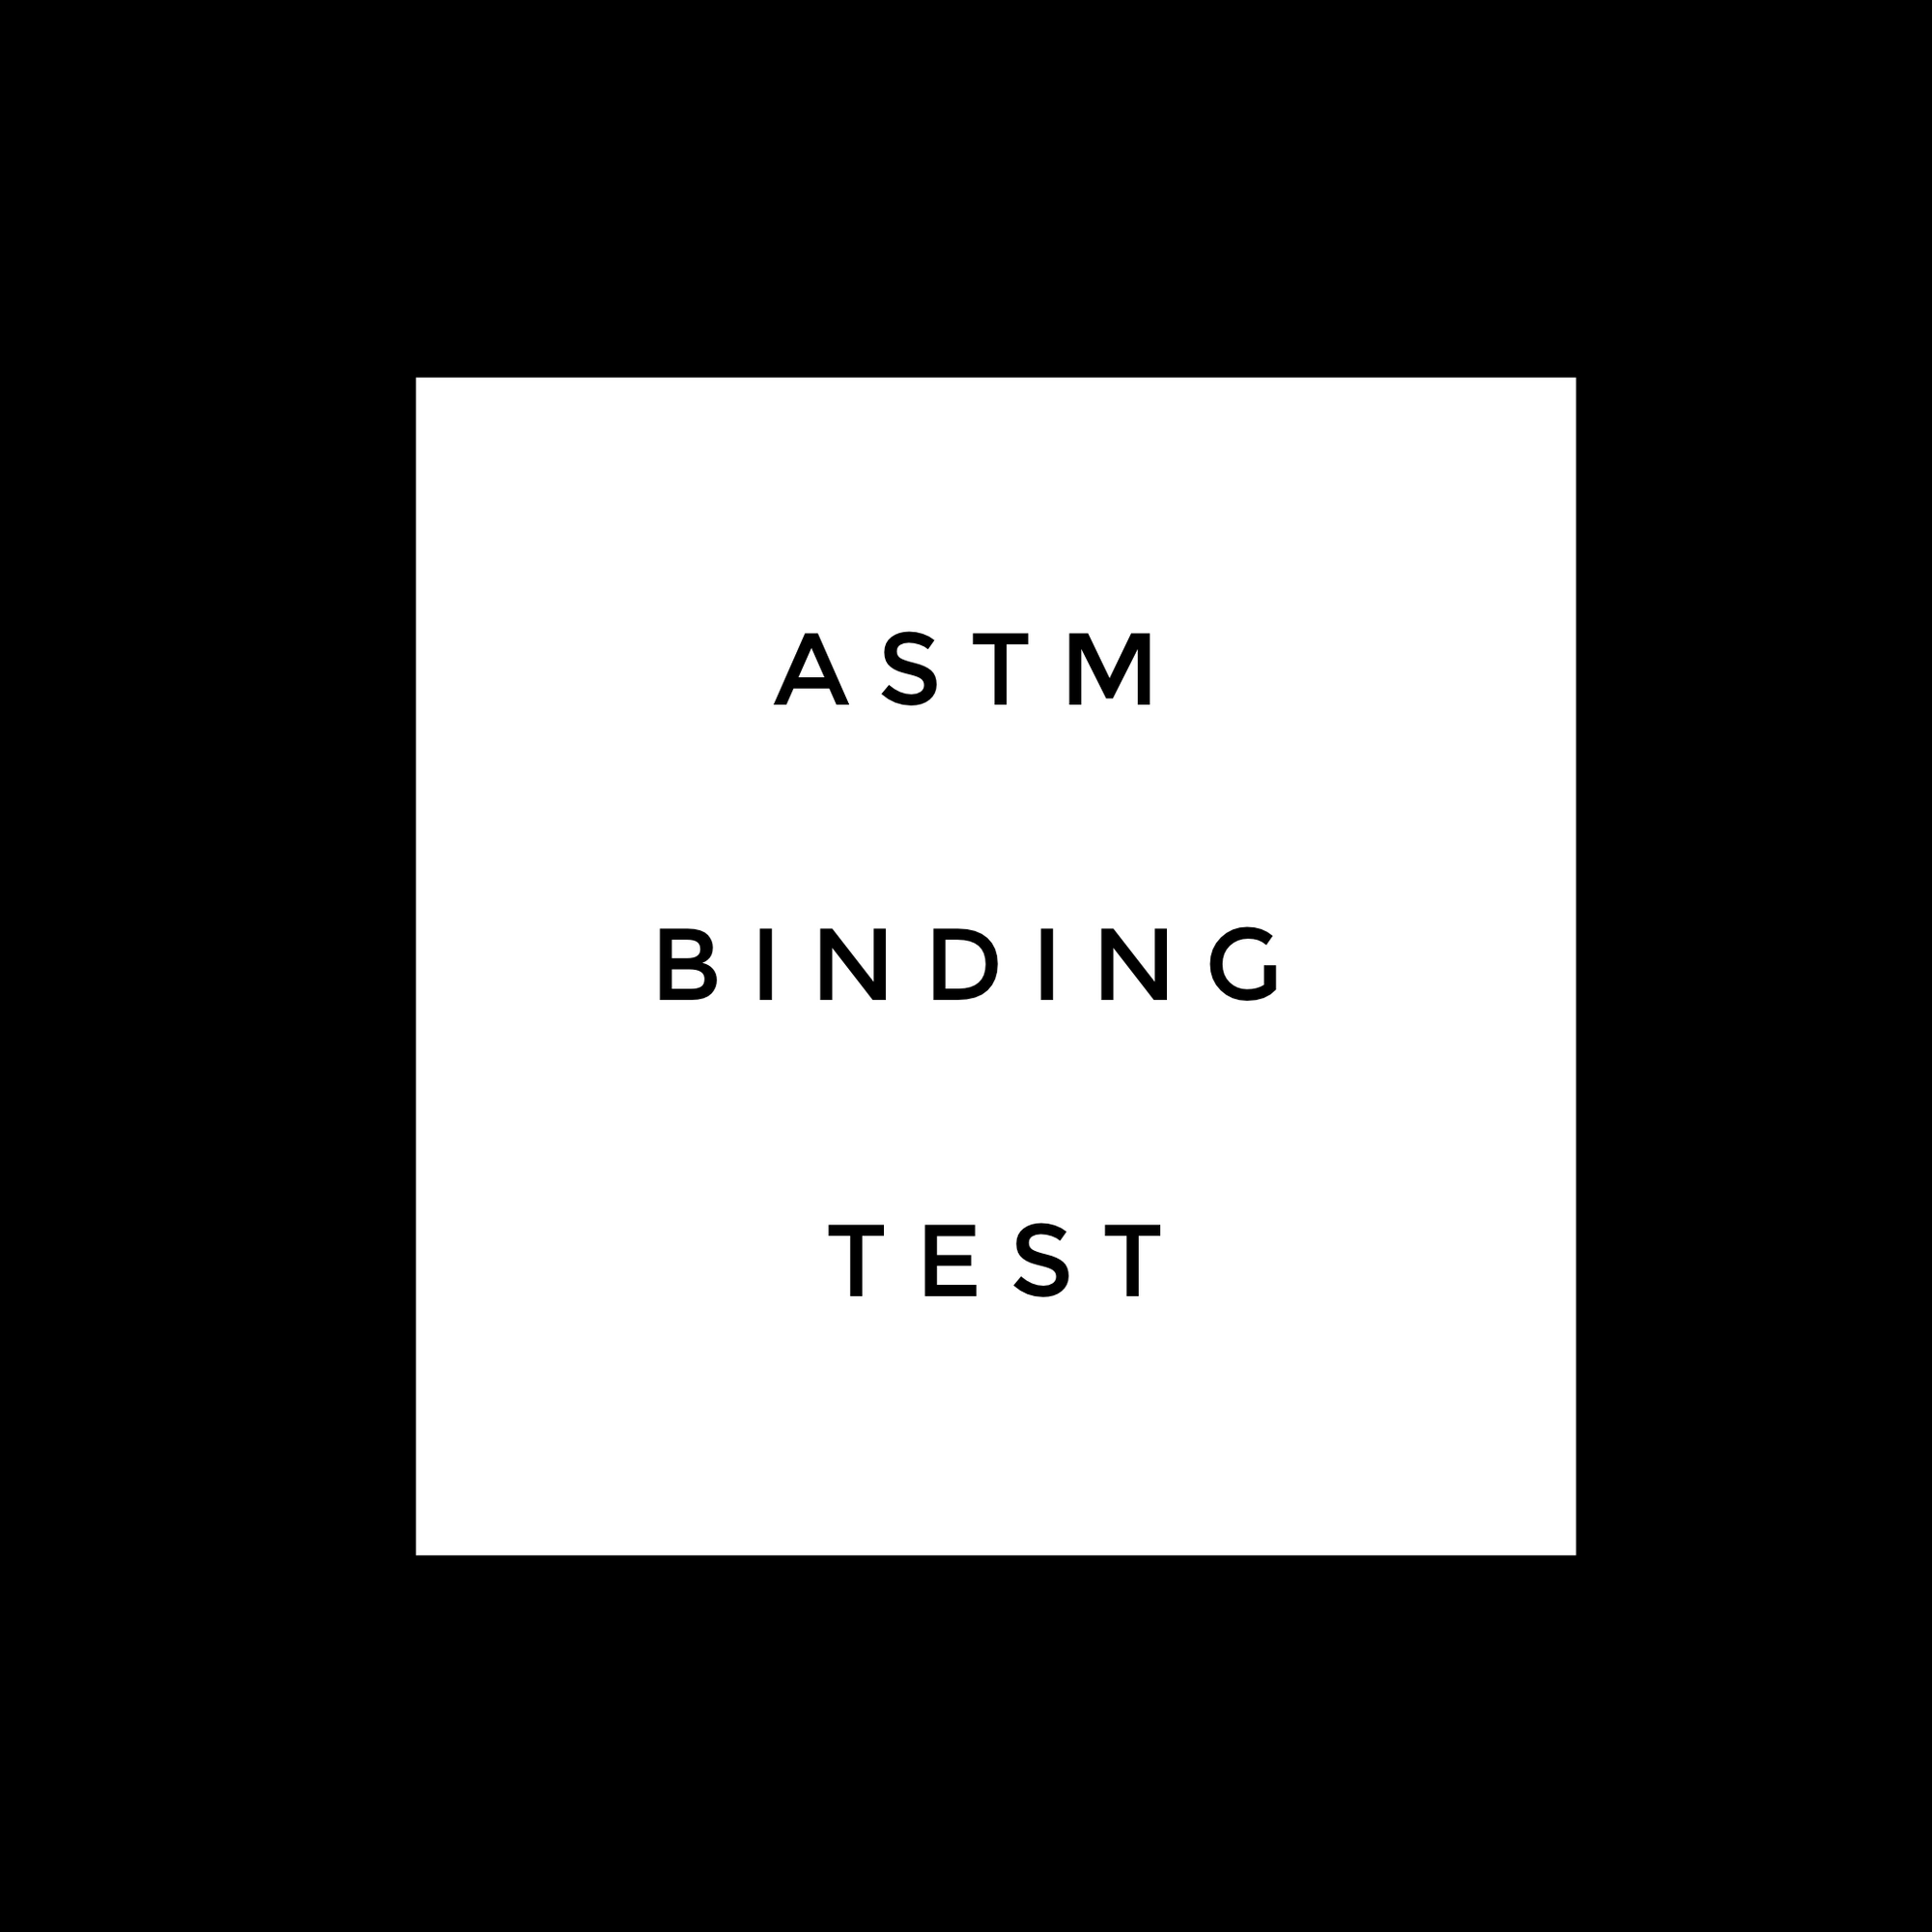 ASTM Binding Test